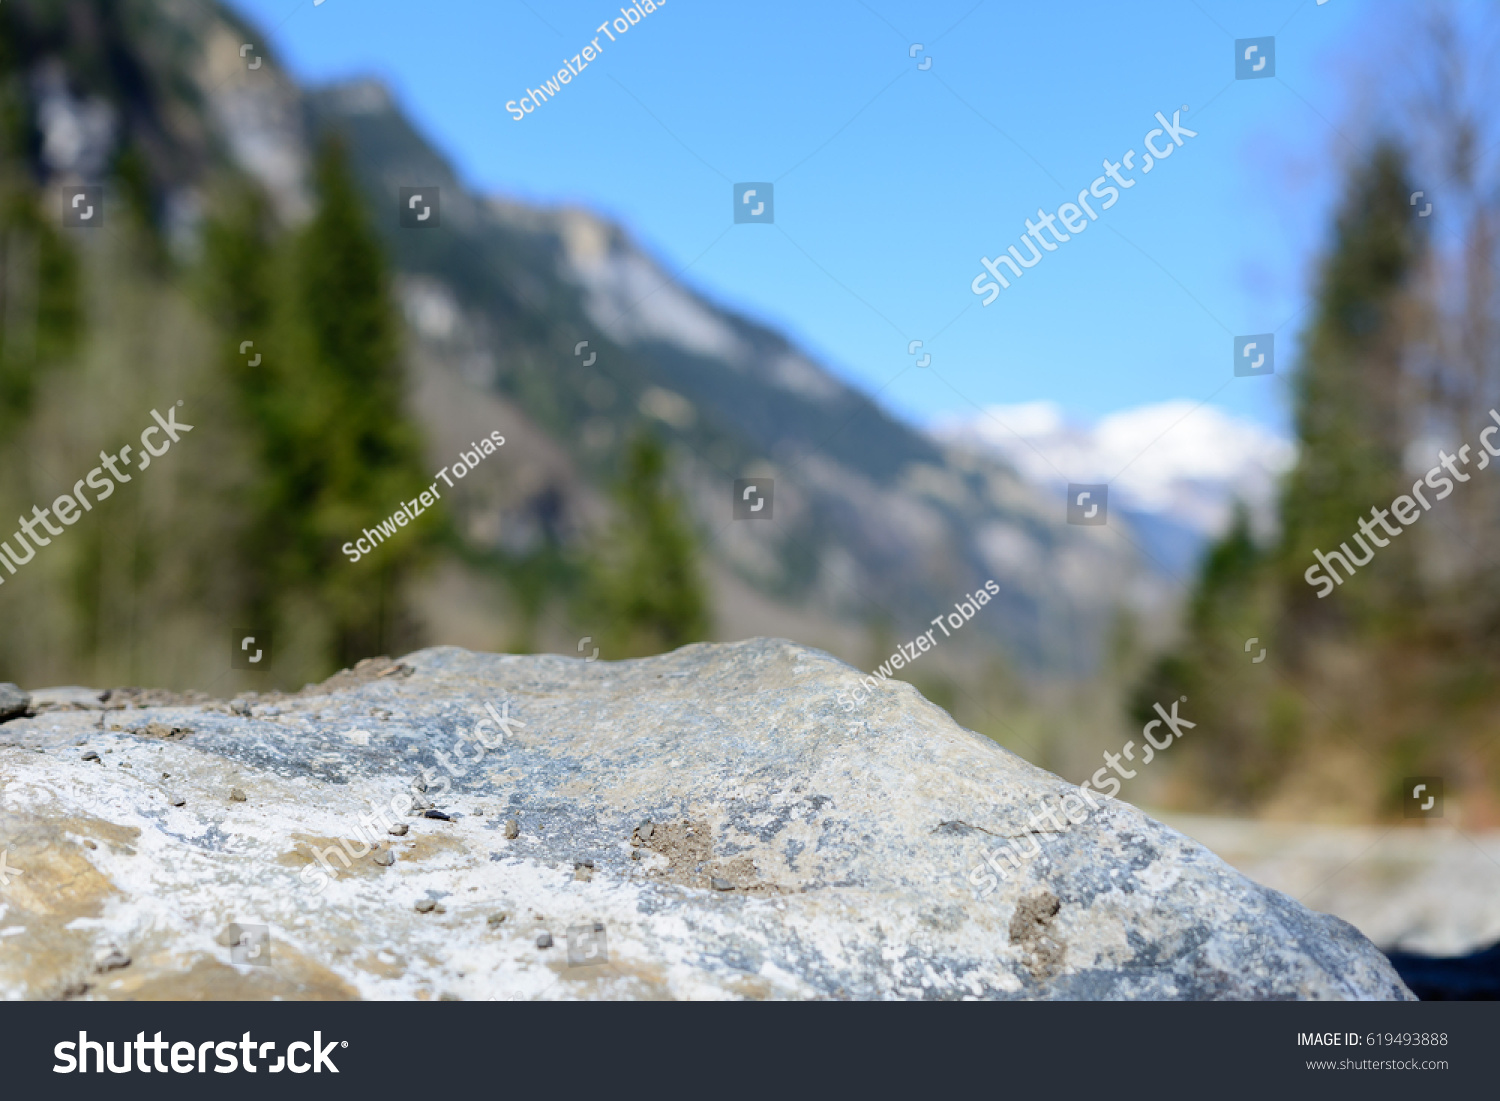 Rock in alps is Mountains of Switzerland in Summer #619493888